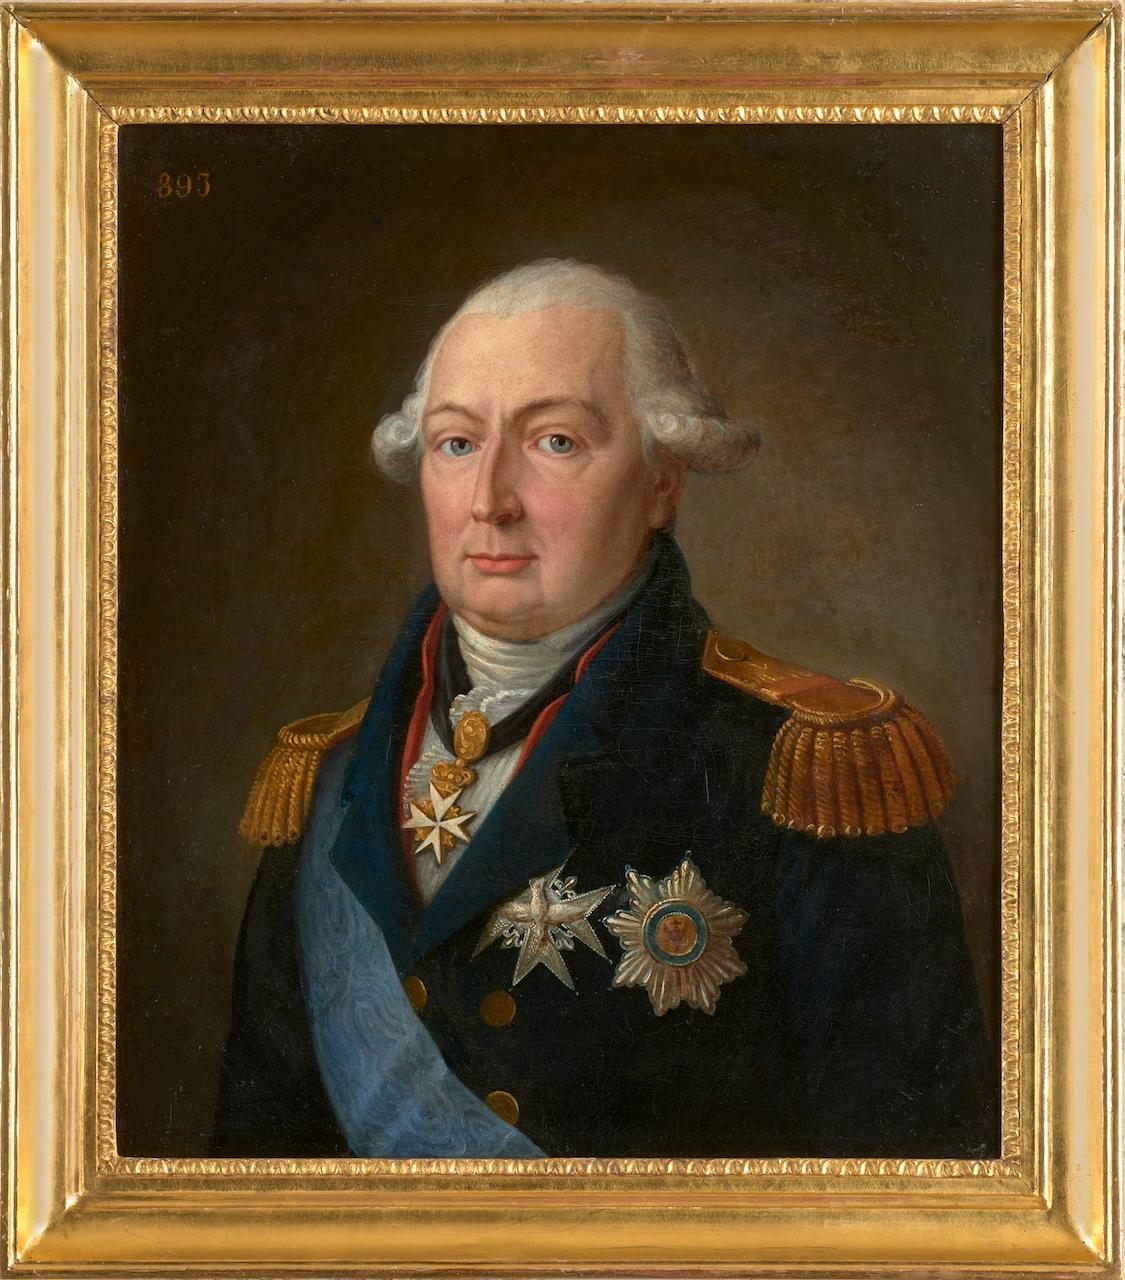 Brustbild von Louis V Joseph de Bourbon-Condé (1736-1818), Prince de Condé